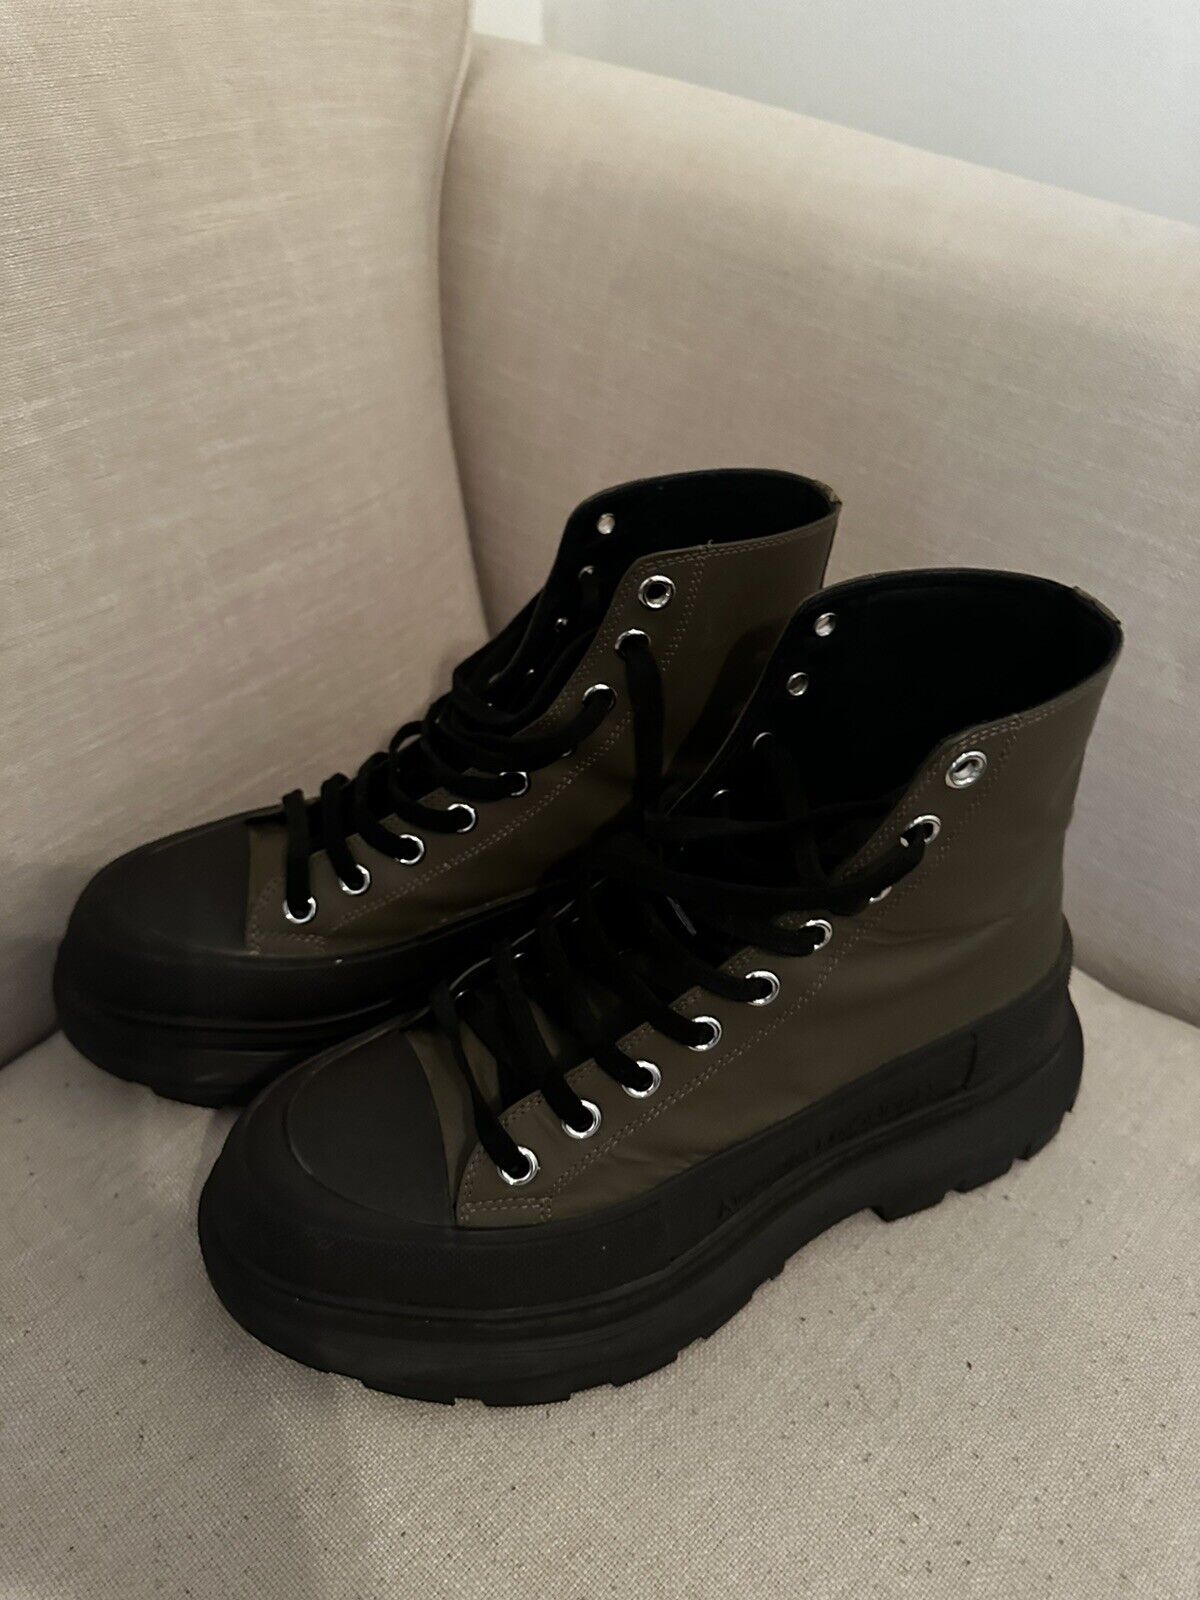 Alexander McQueen Tread Slick Leather Men’s Boots Size 42 EU / 9 US Green  Black